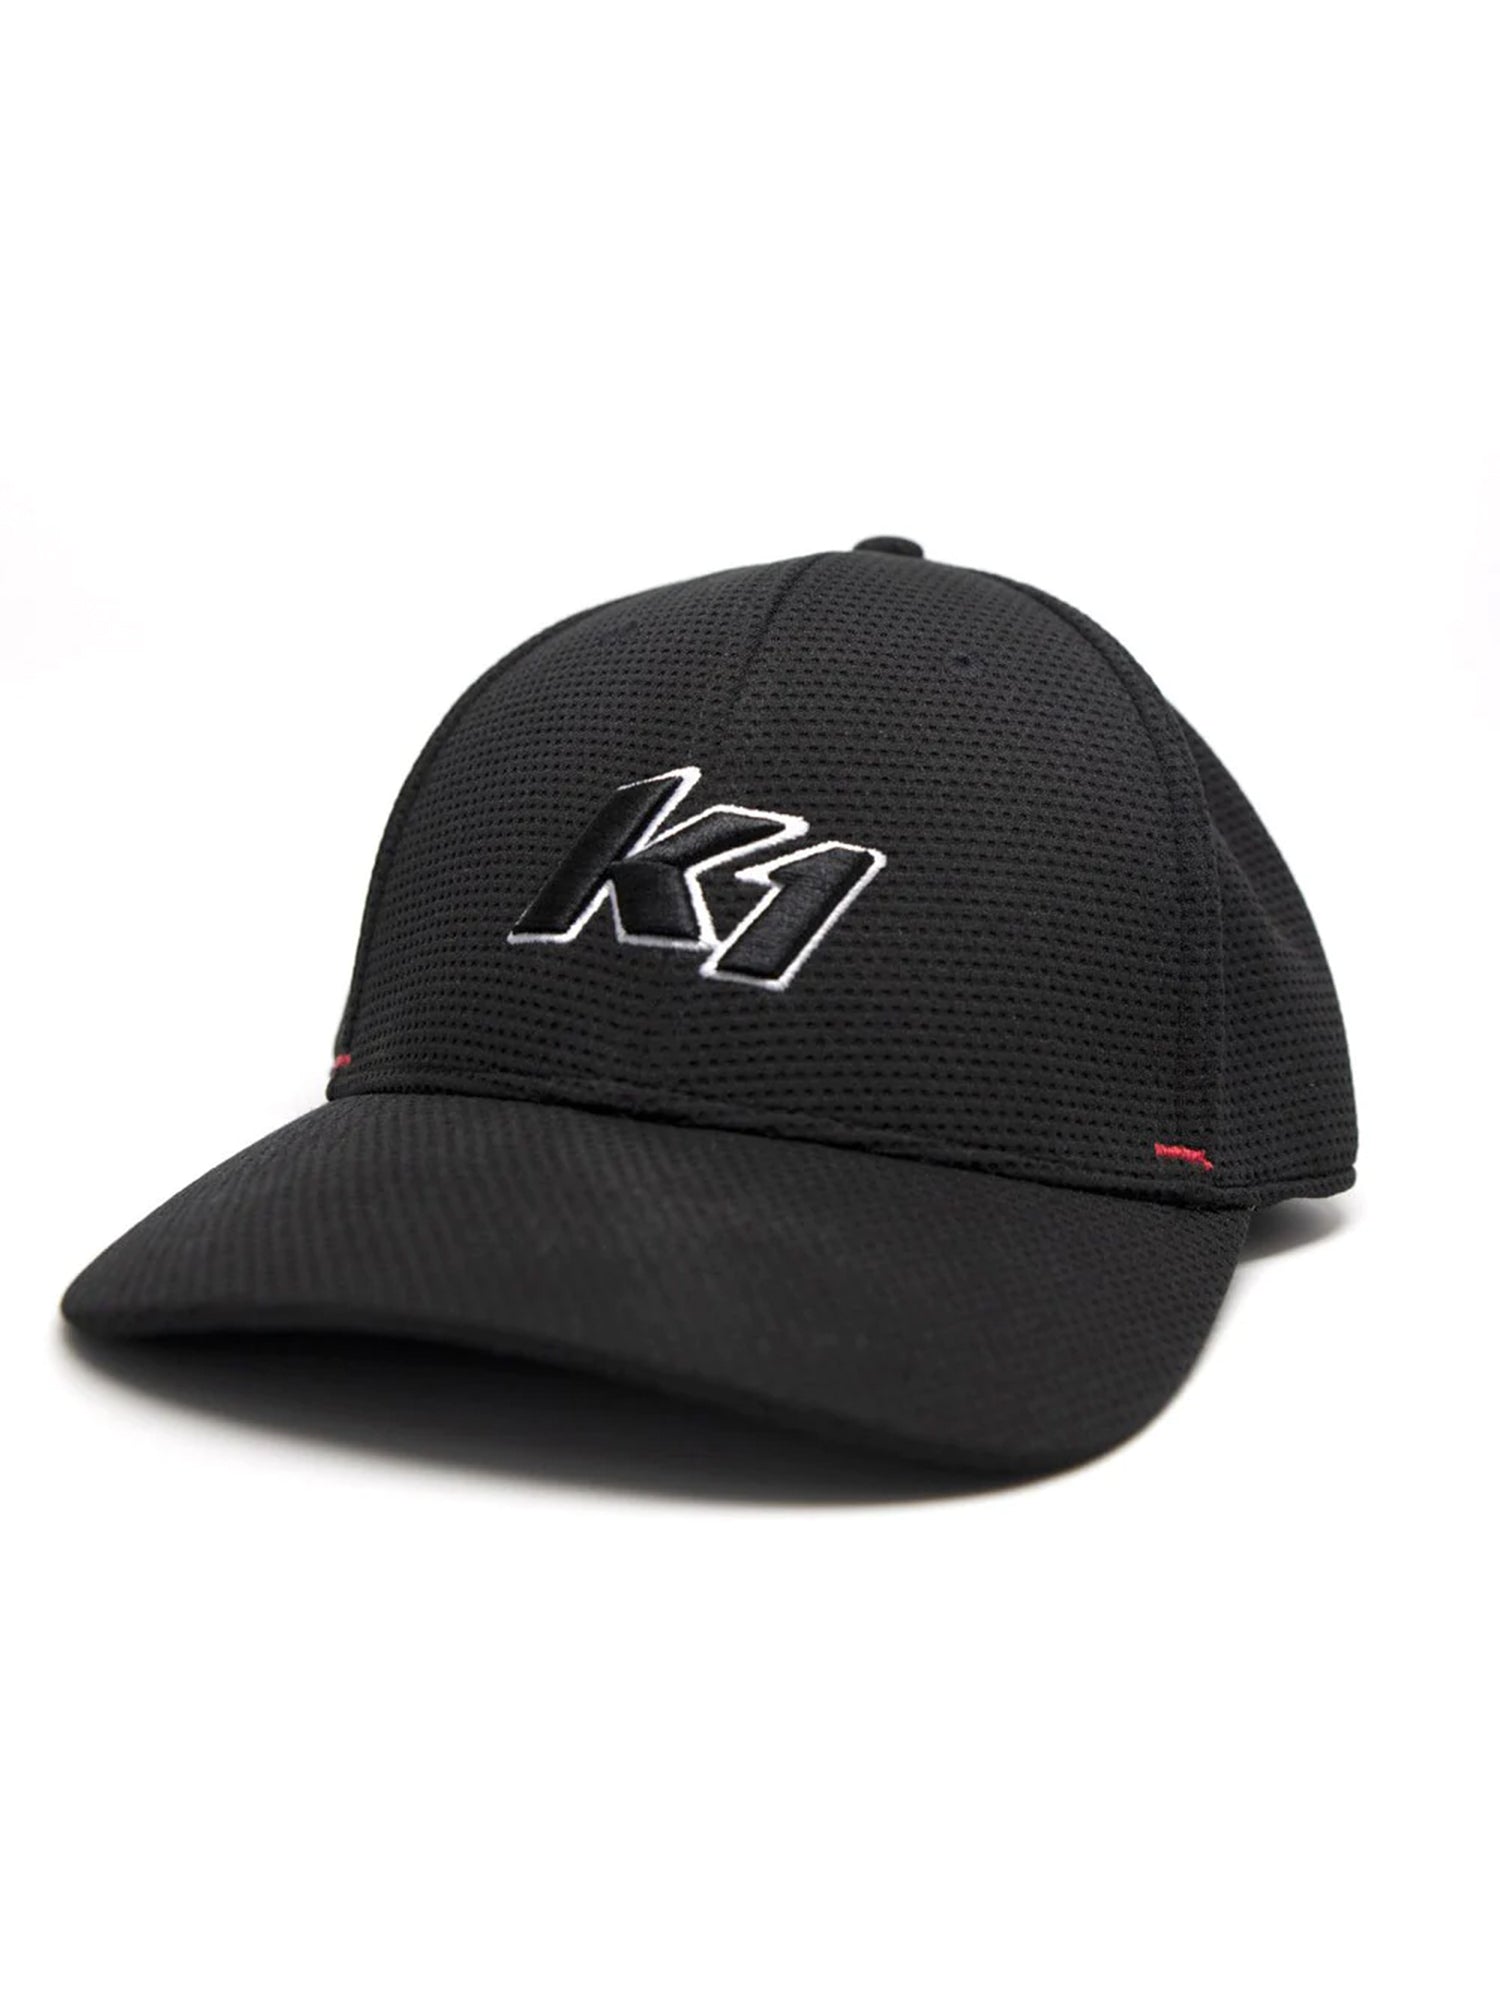 K1 Innovation Adjustable Hat